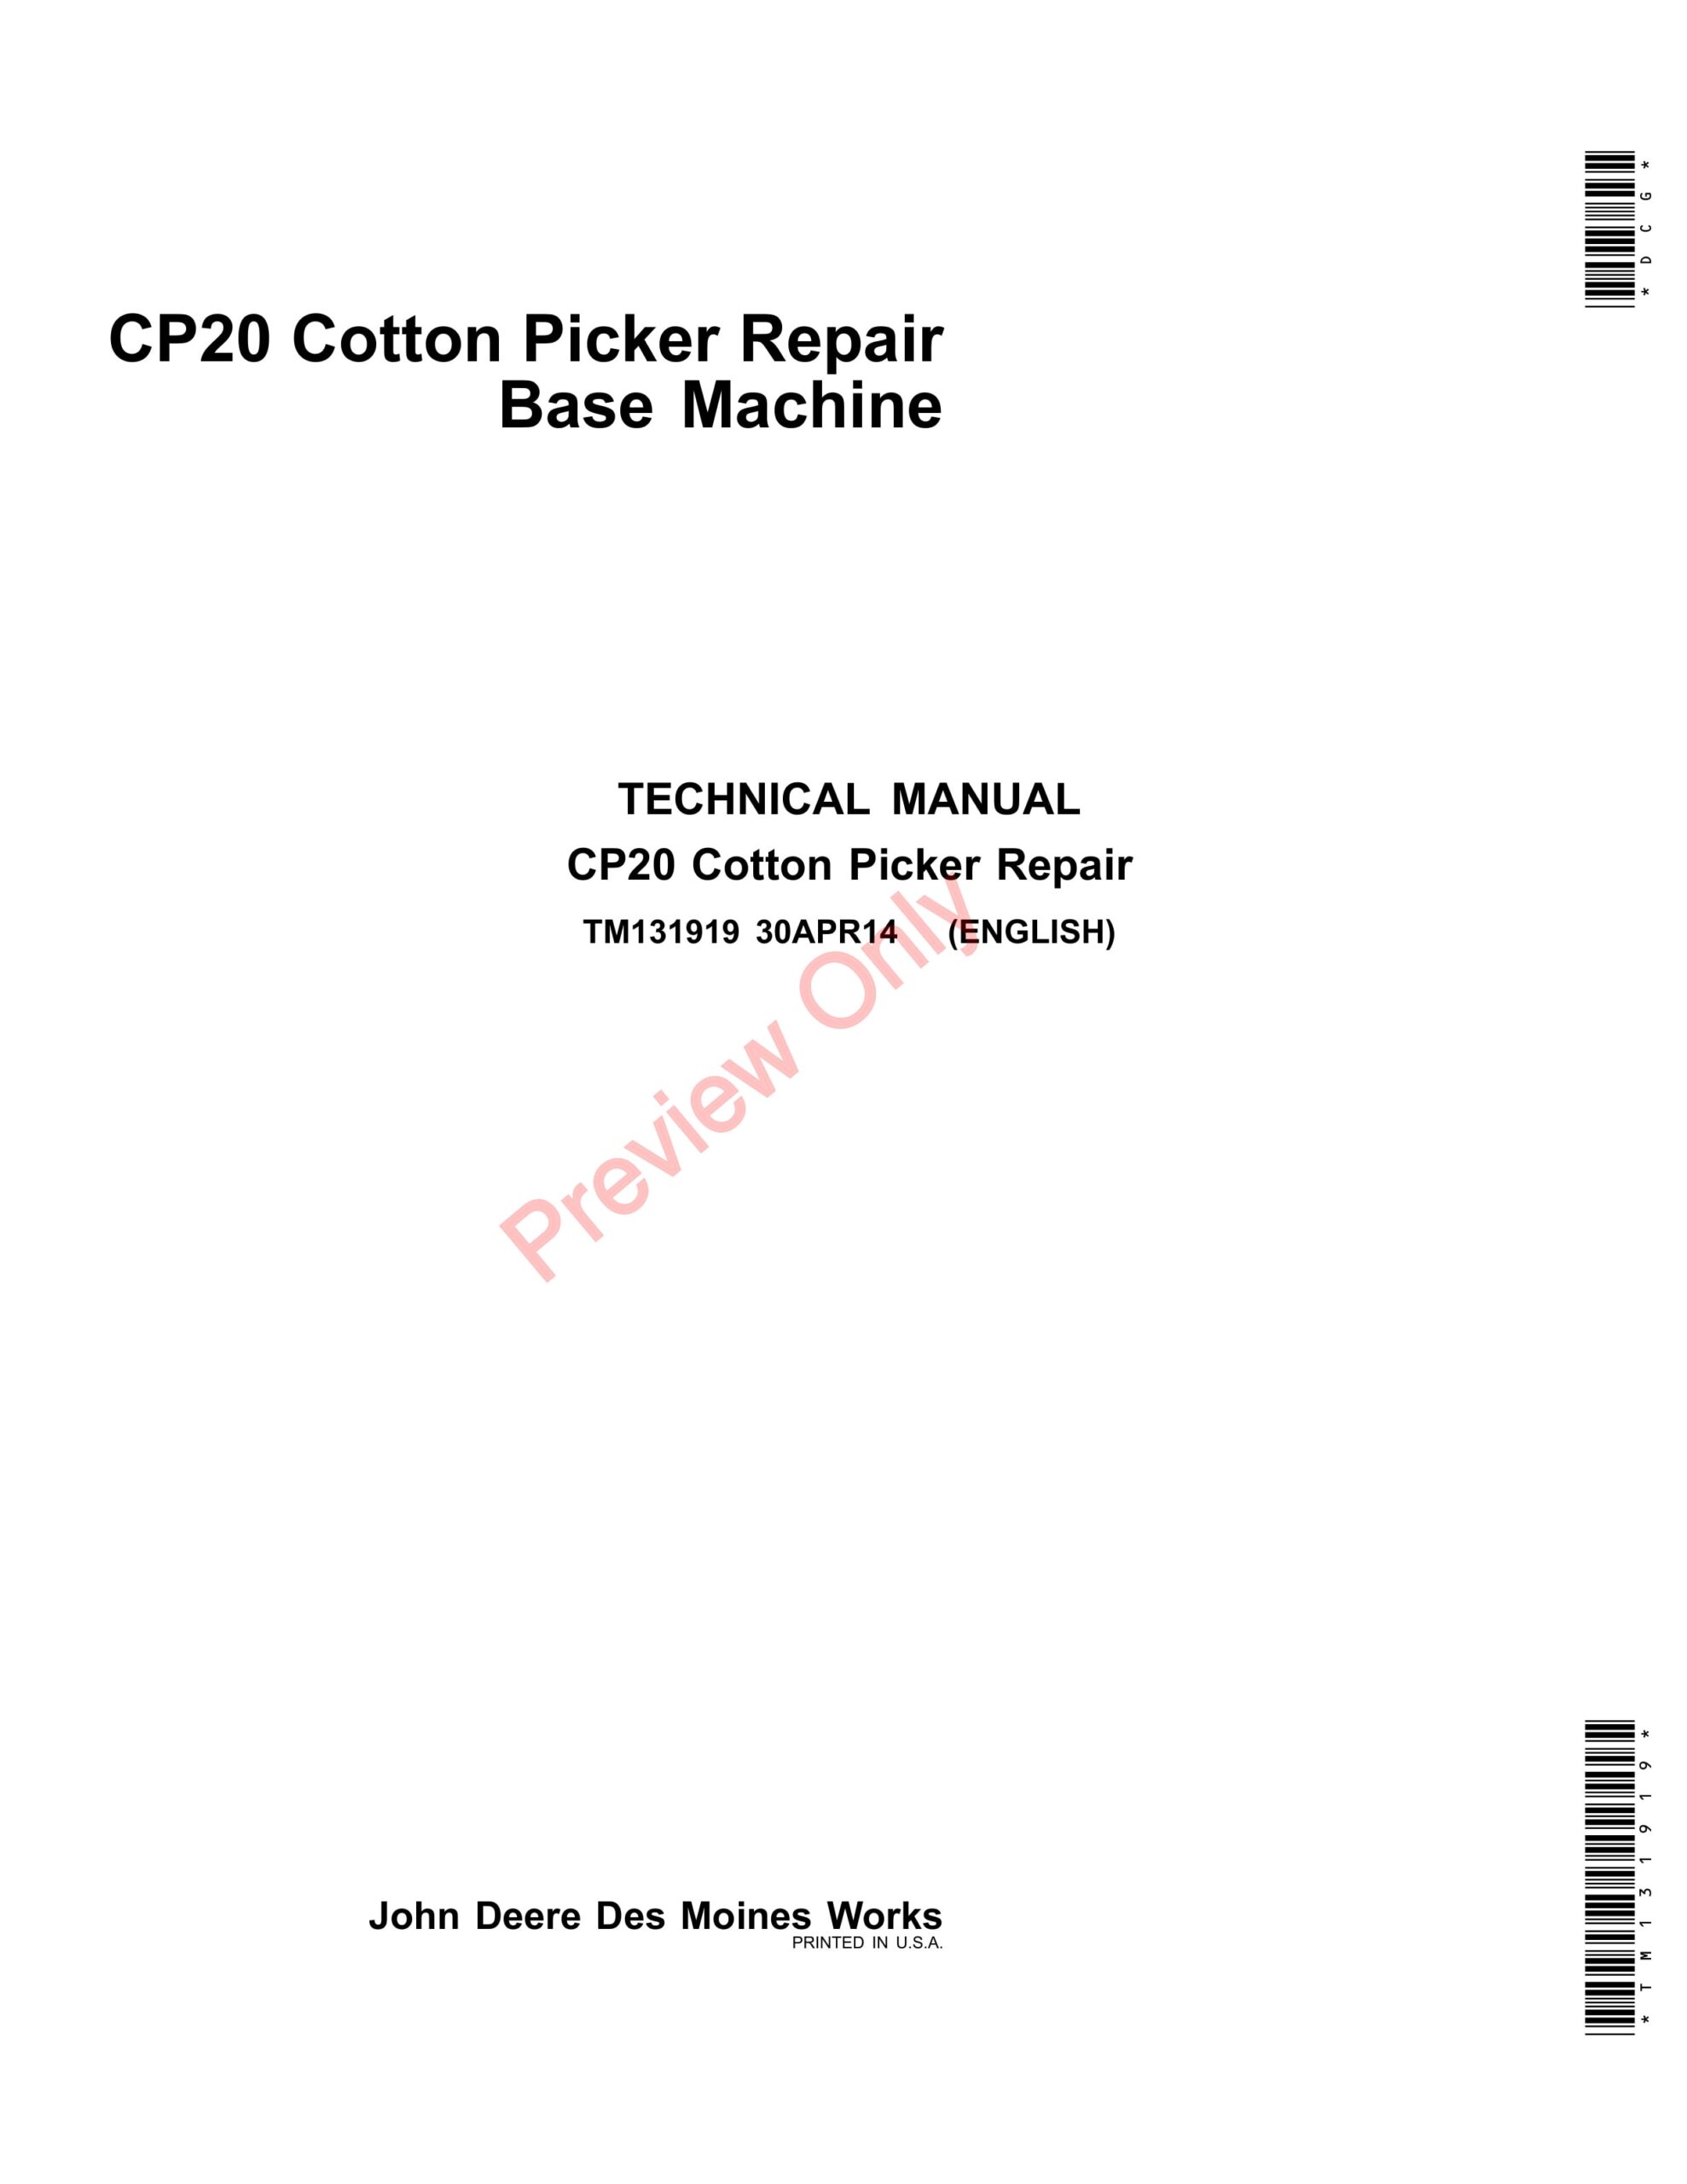 John Deere CP20 Cotton Picker Base Machine Technical Manual TM131919 30APR14-1